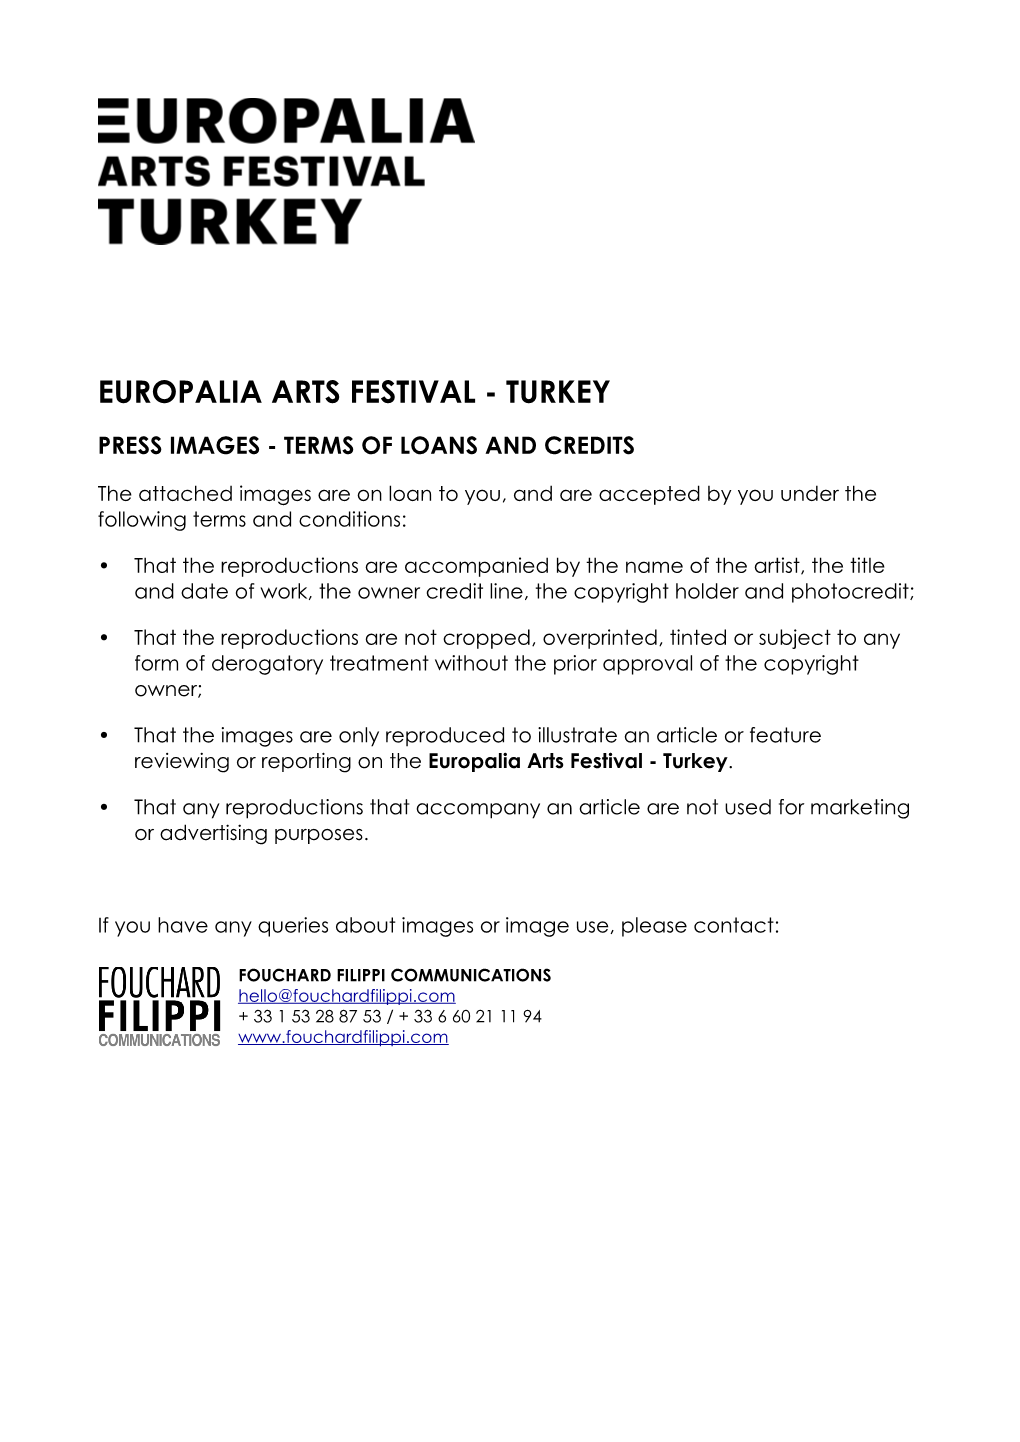 Europalia Arts Festival - Turkey